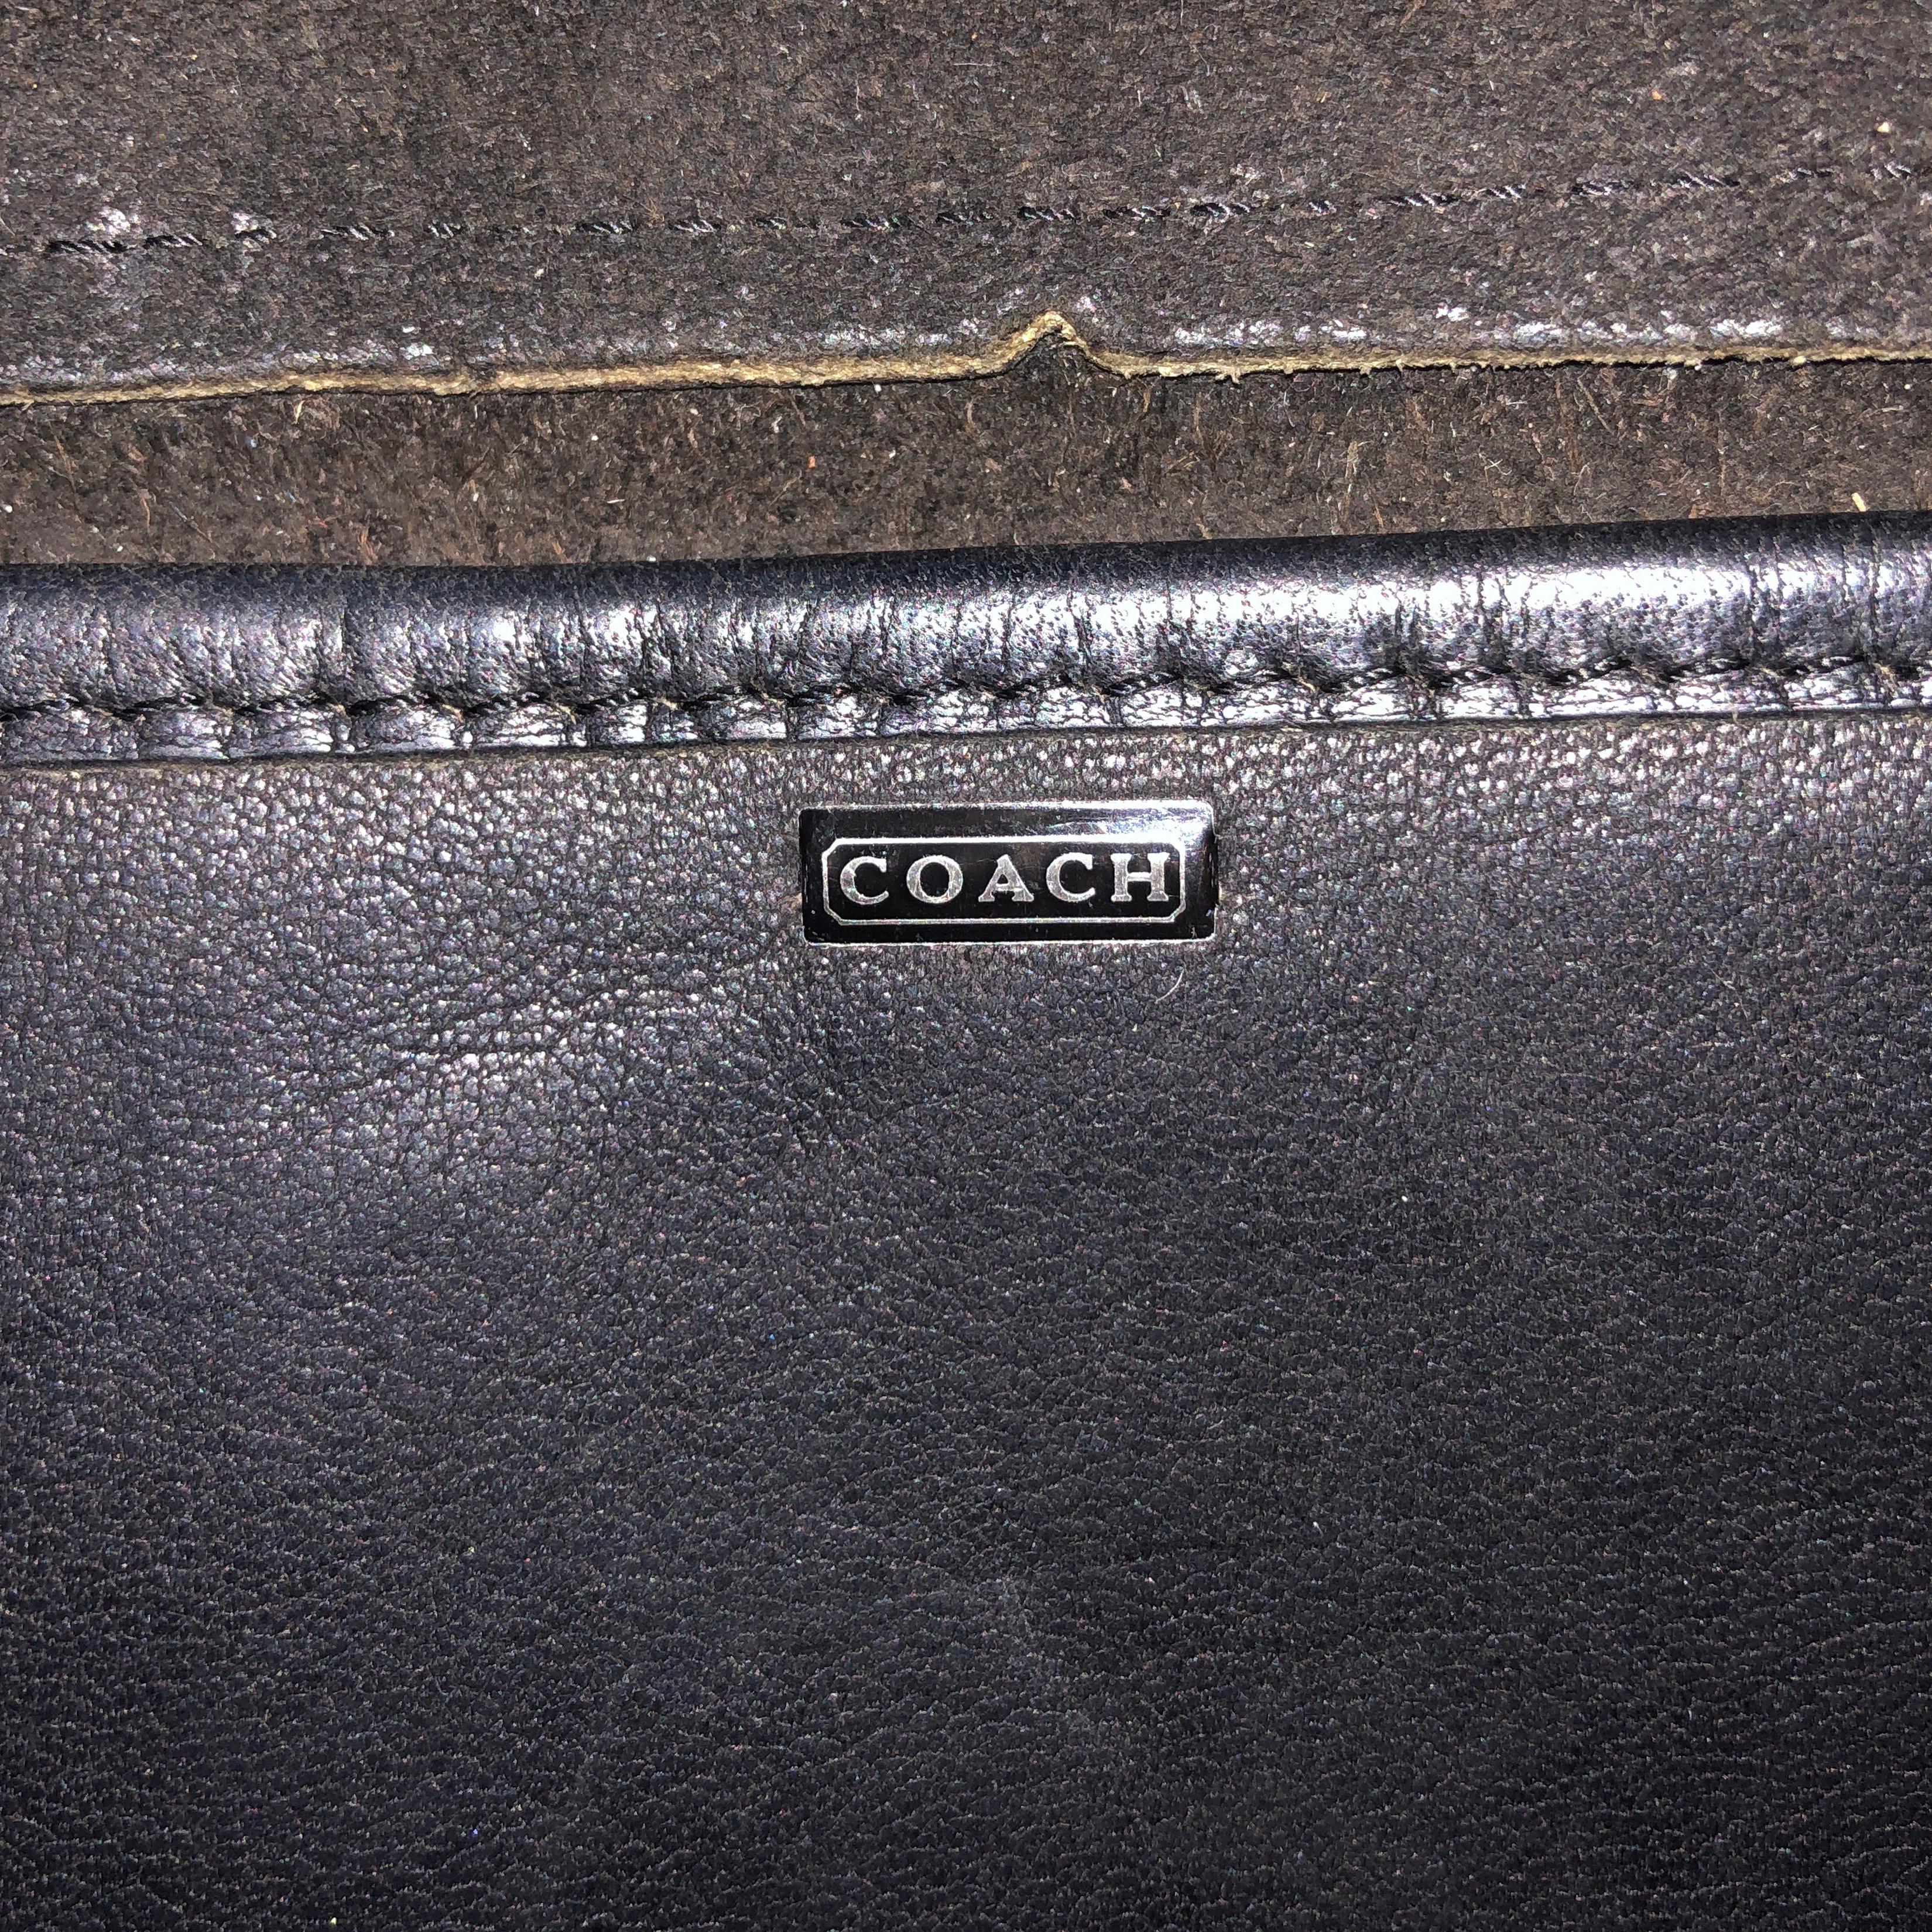 Vintage Bonnie Cashin Coach Courier Bag with Double Front Flaps Rare 60s NYC Bag 8